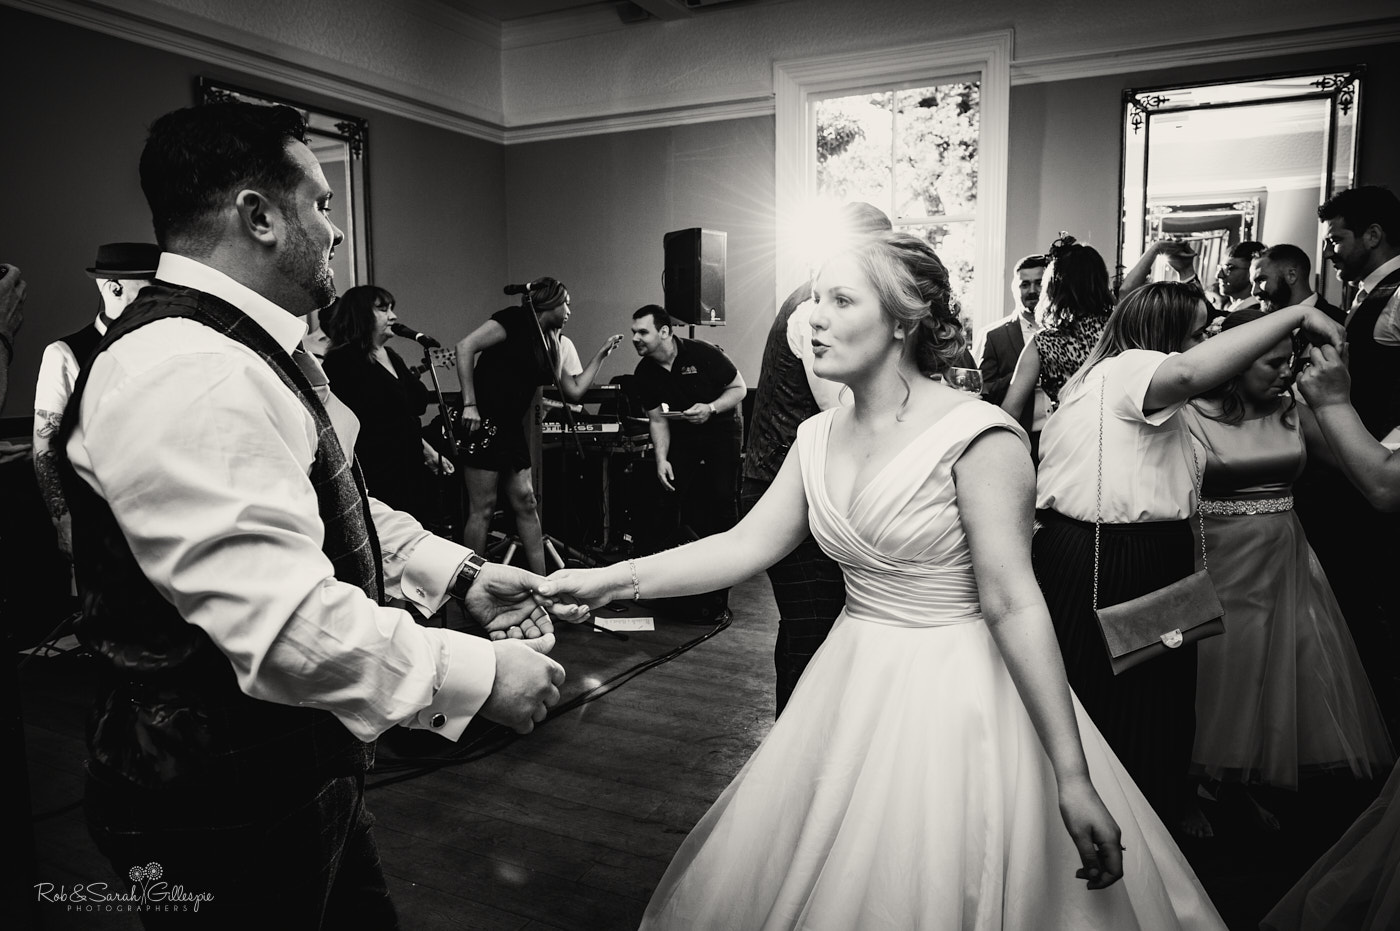 Wedding dancing at Pendrell Hall